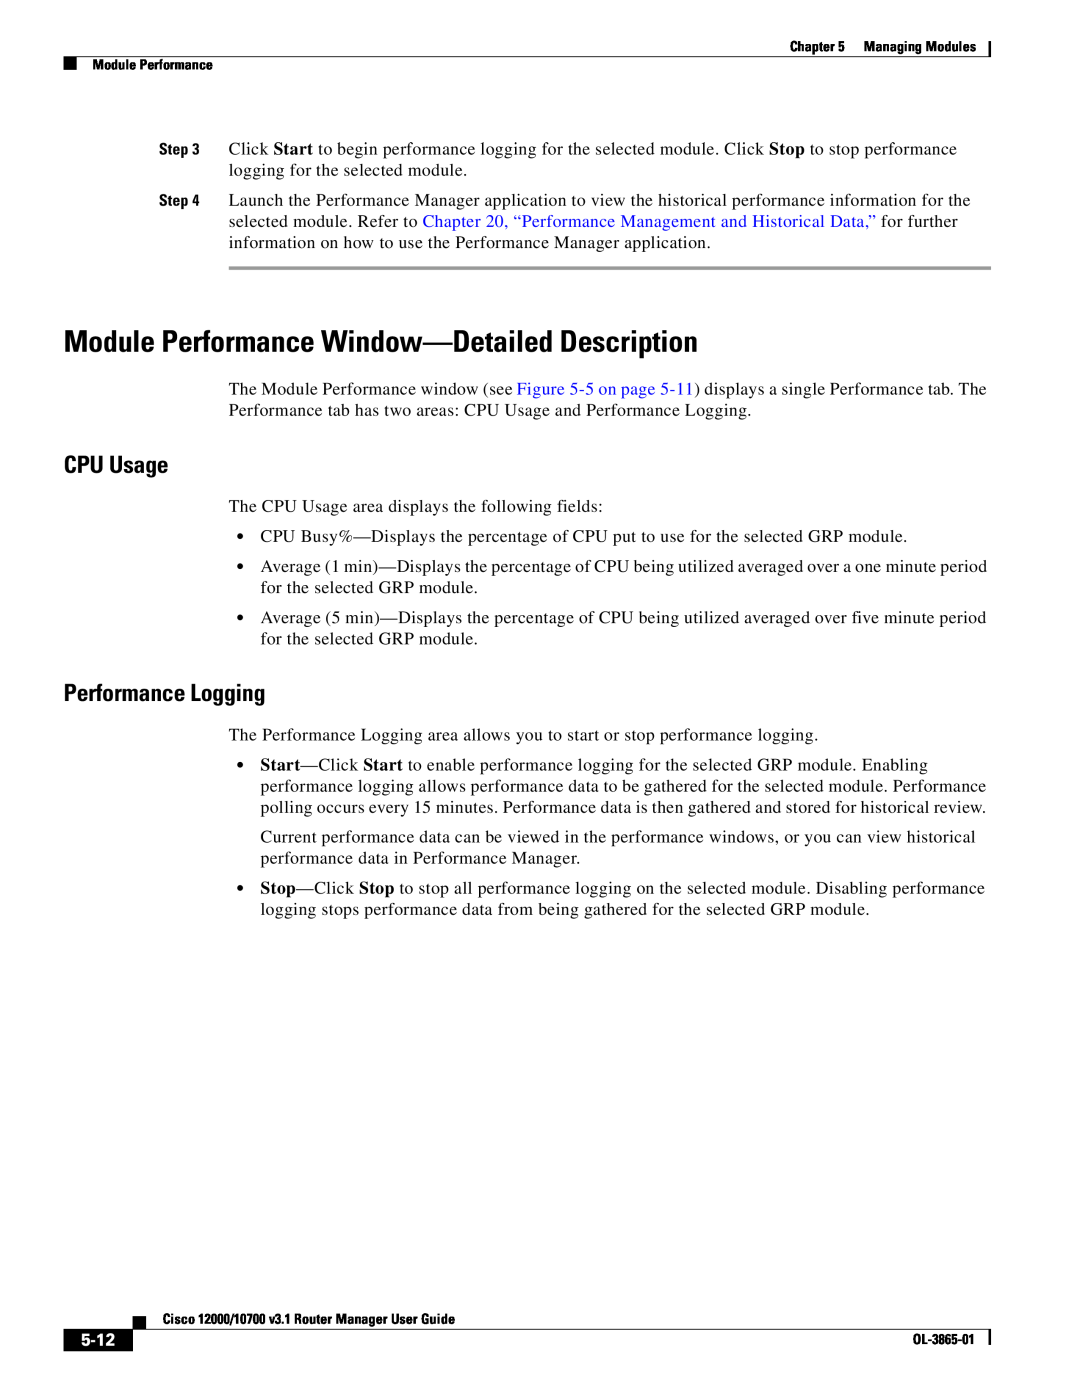 Cisco Systems 10700 manual Module Performance Window-Detailed Description, CPU Usage, Performance Logging, 5-12 